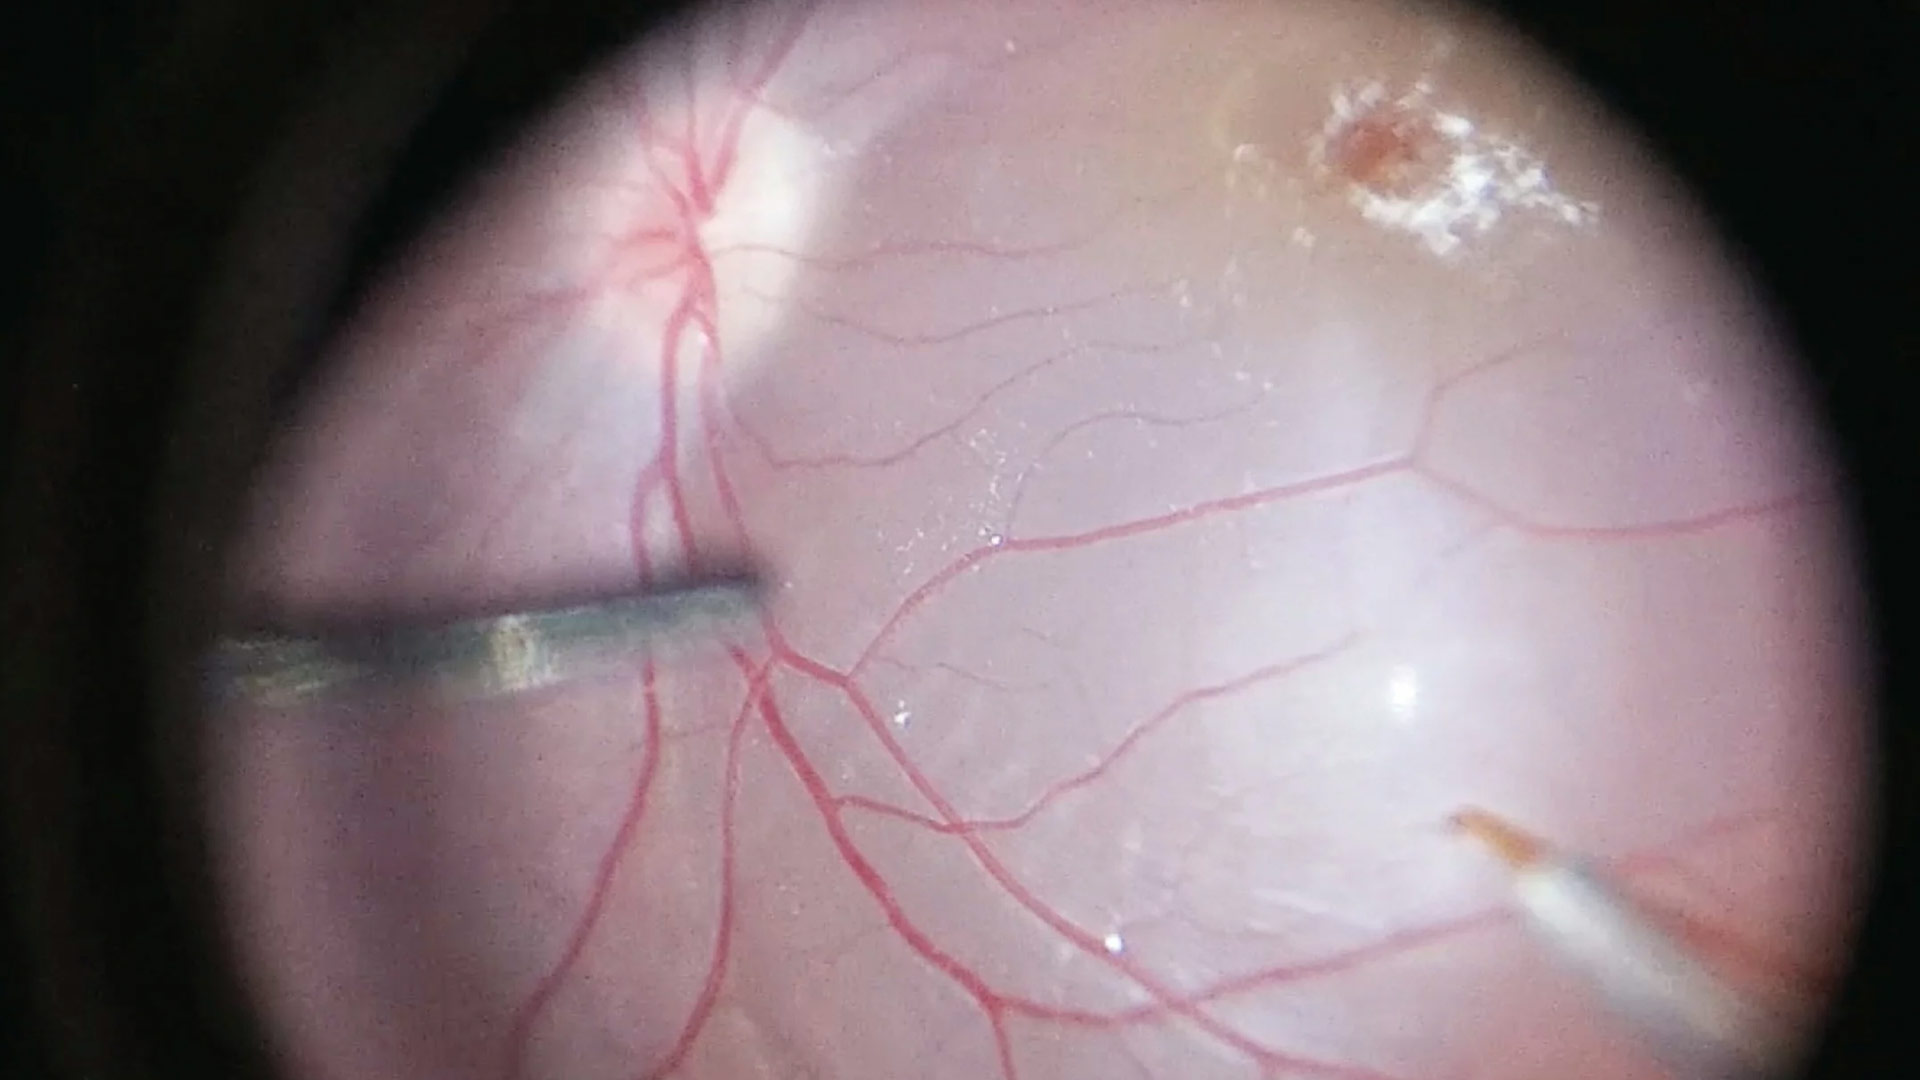 Routine exam reveals unusual retinal findings